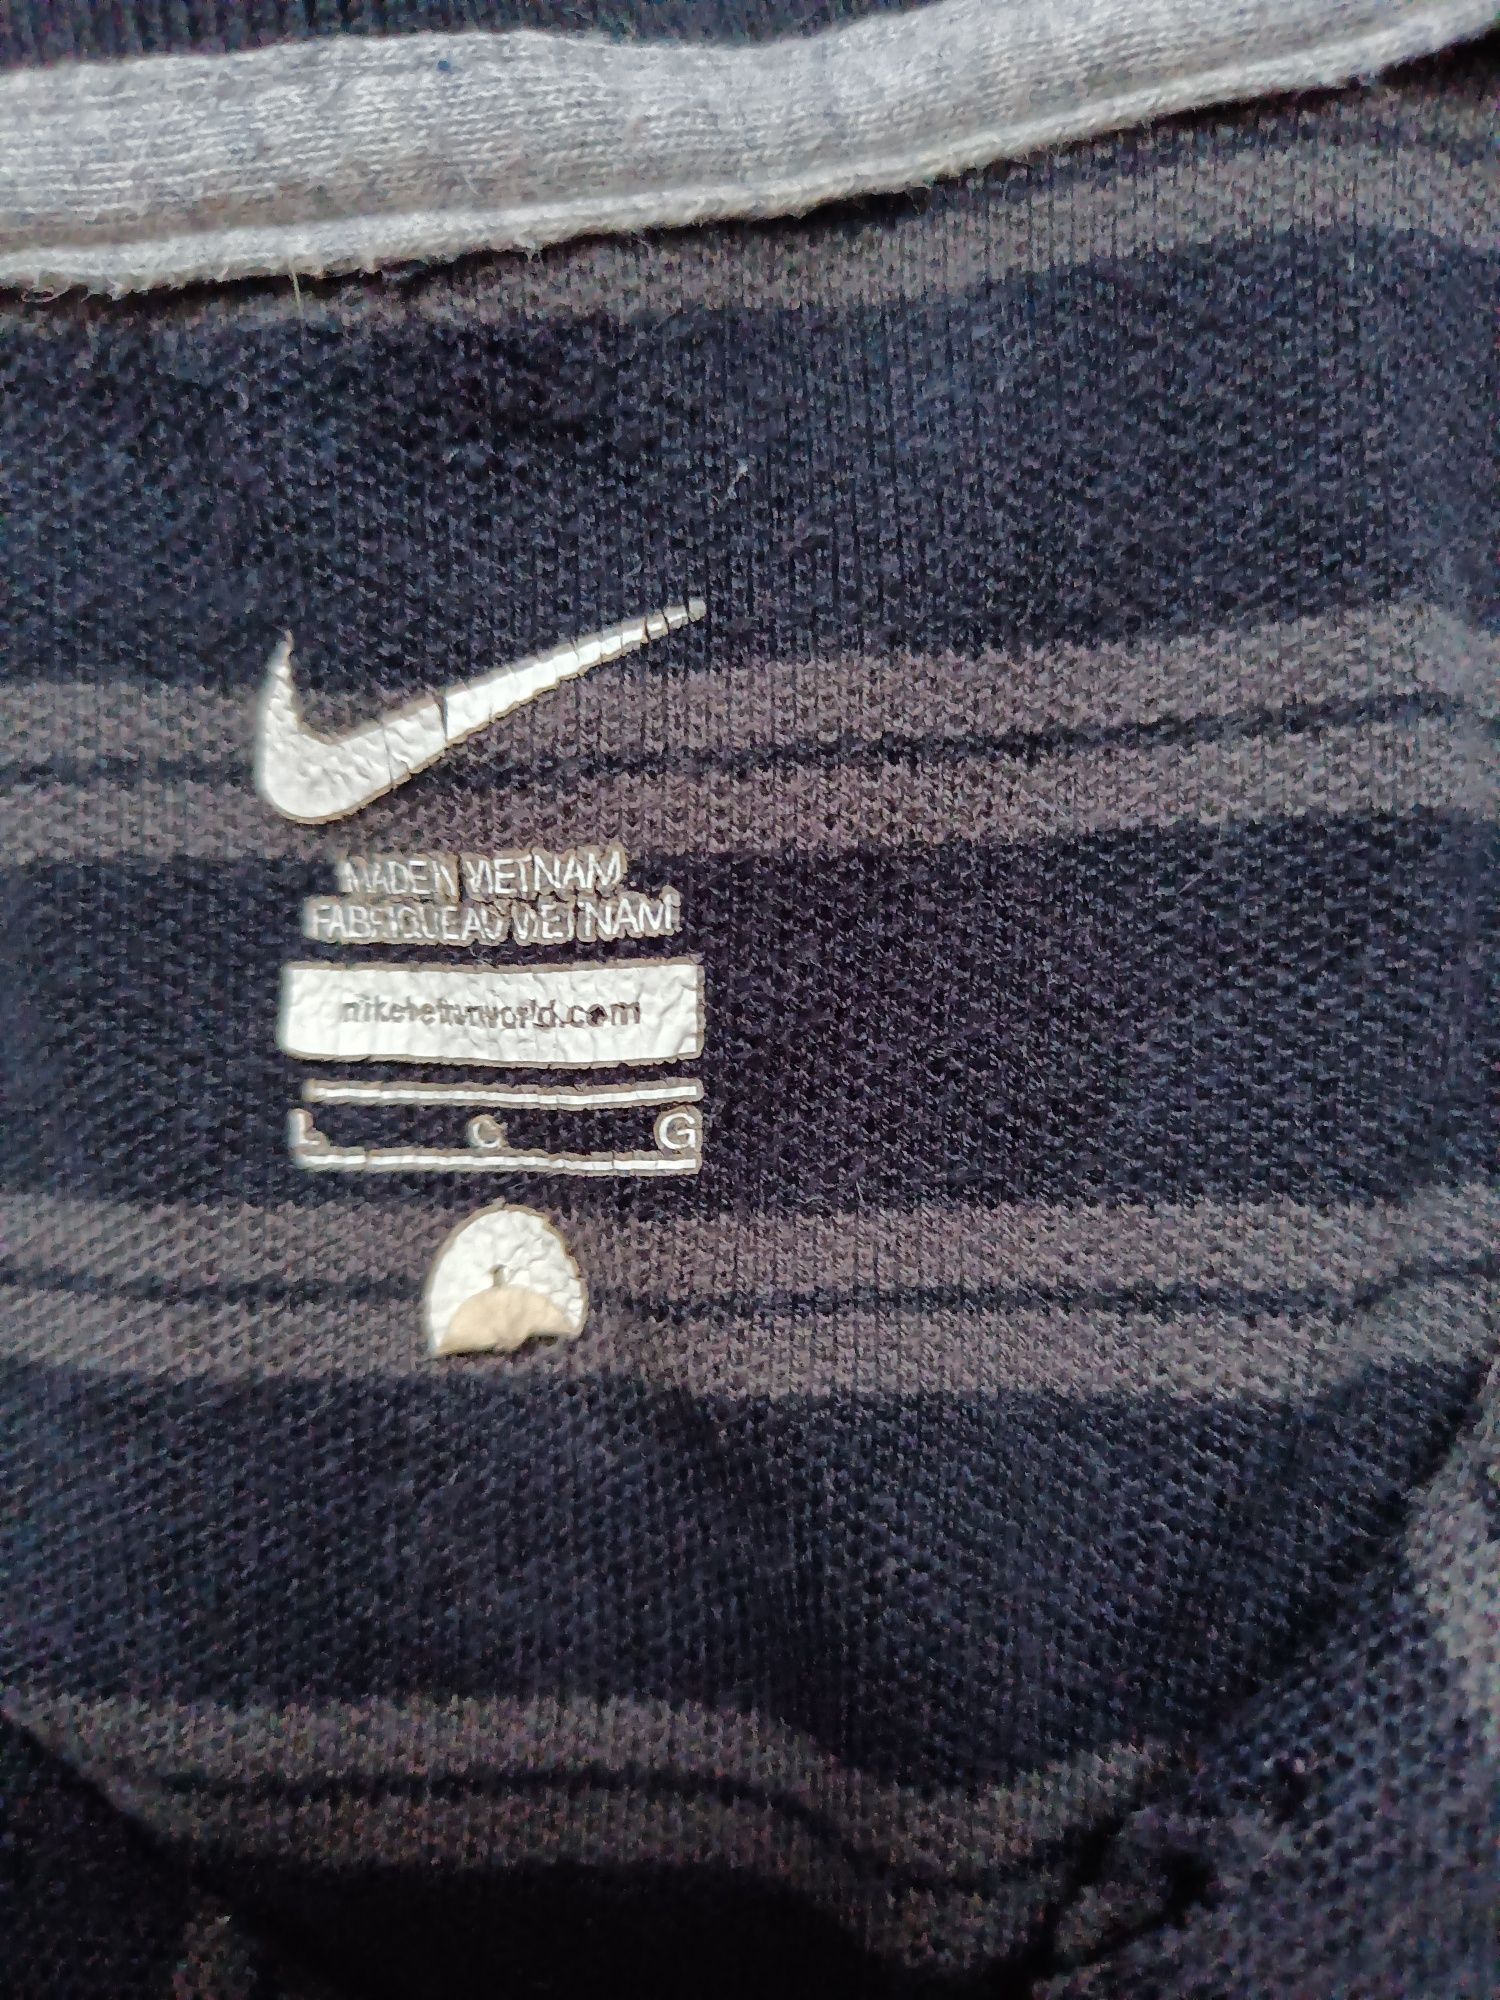 T-shirt bluzka męska polo Nike rozmiar L